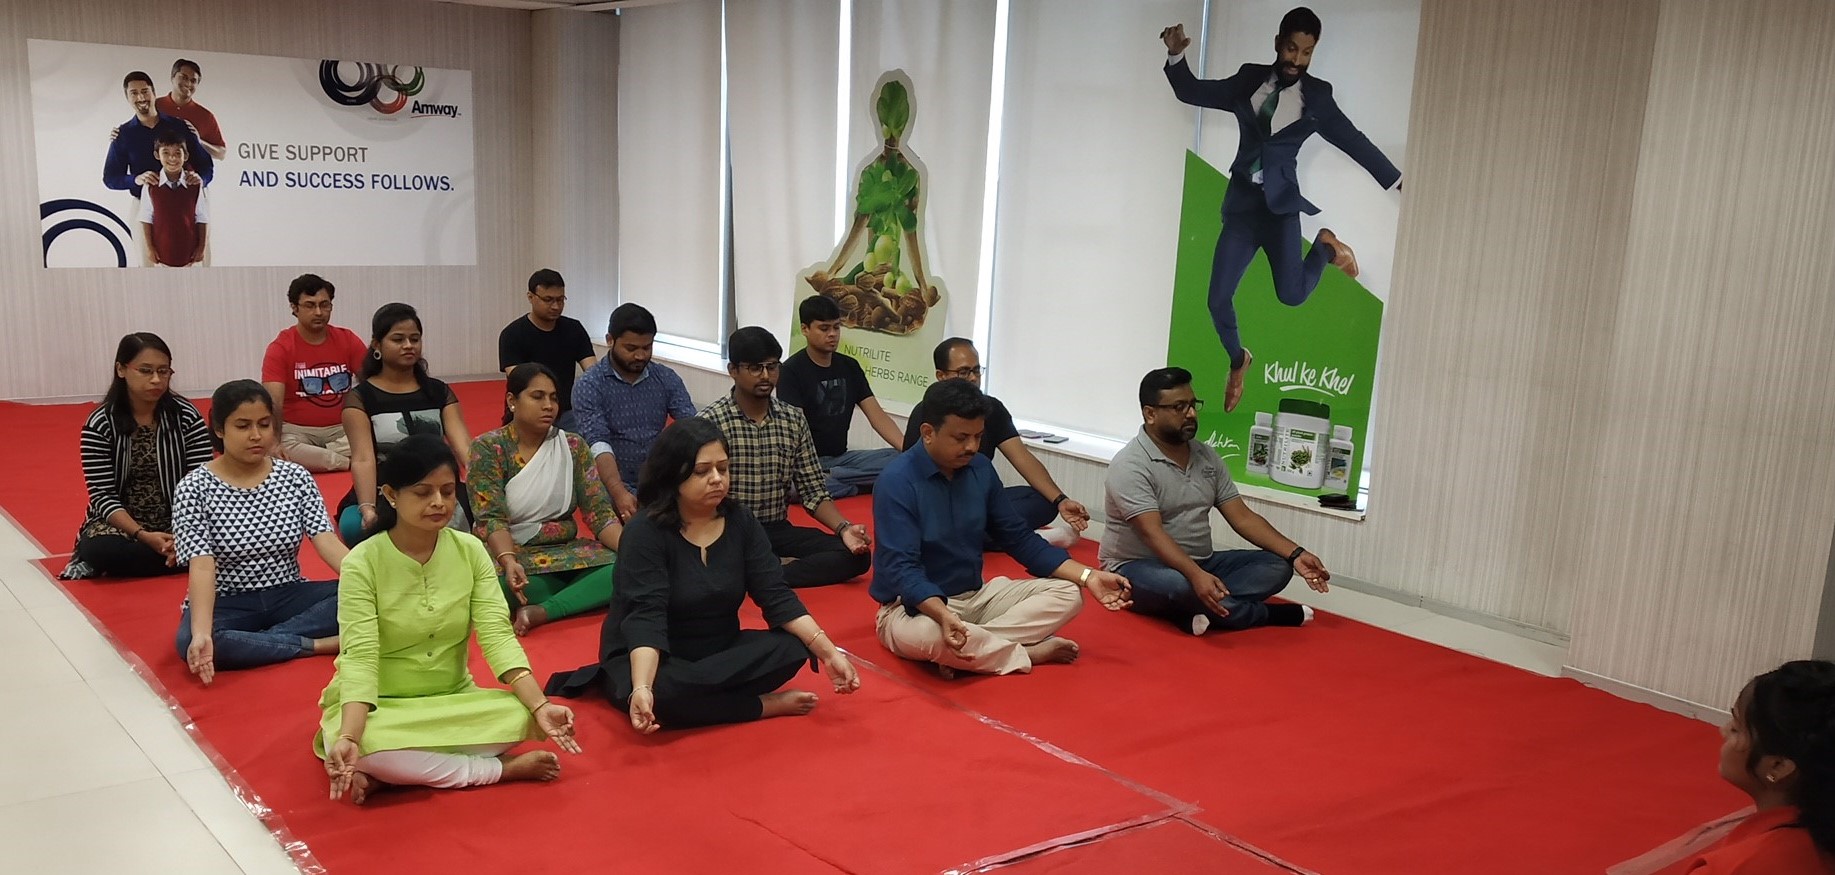 Amway India celebrates International Yoga Day with wellness workshops and yoga sessions in Kolkata